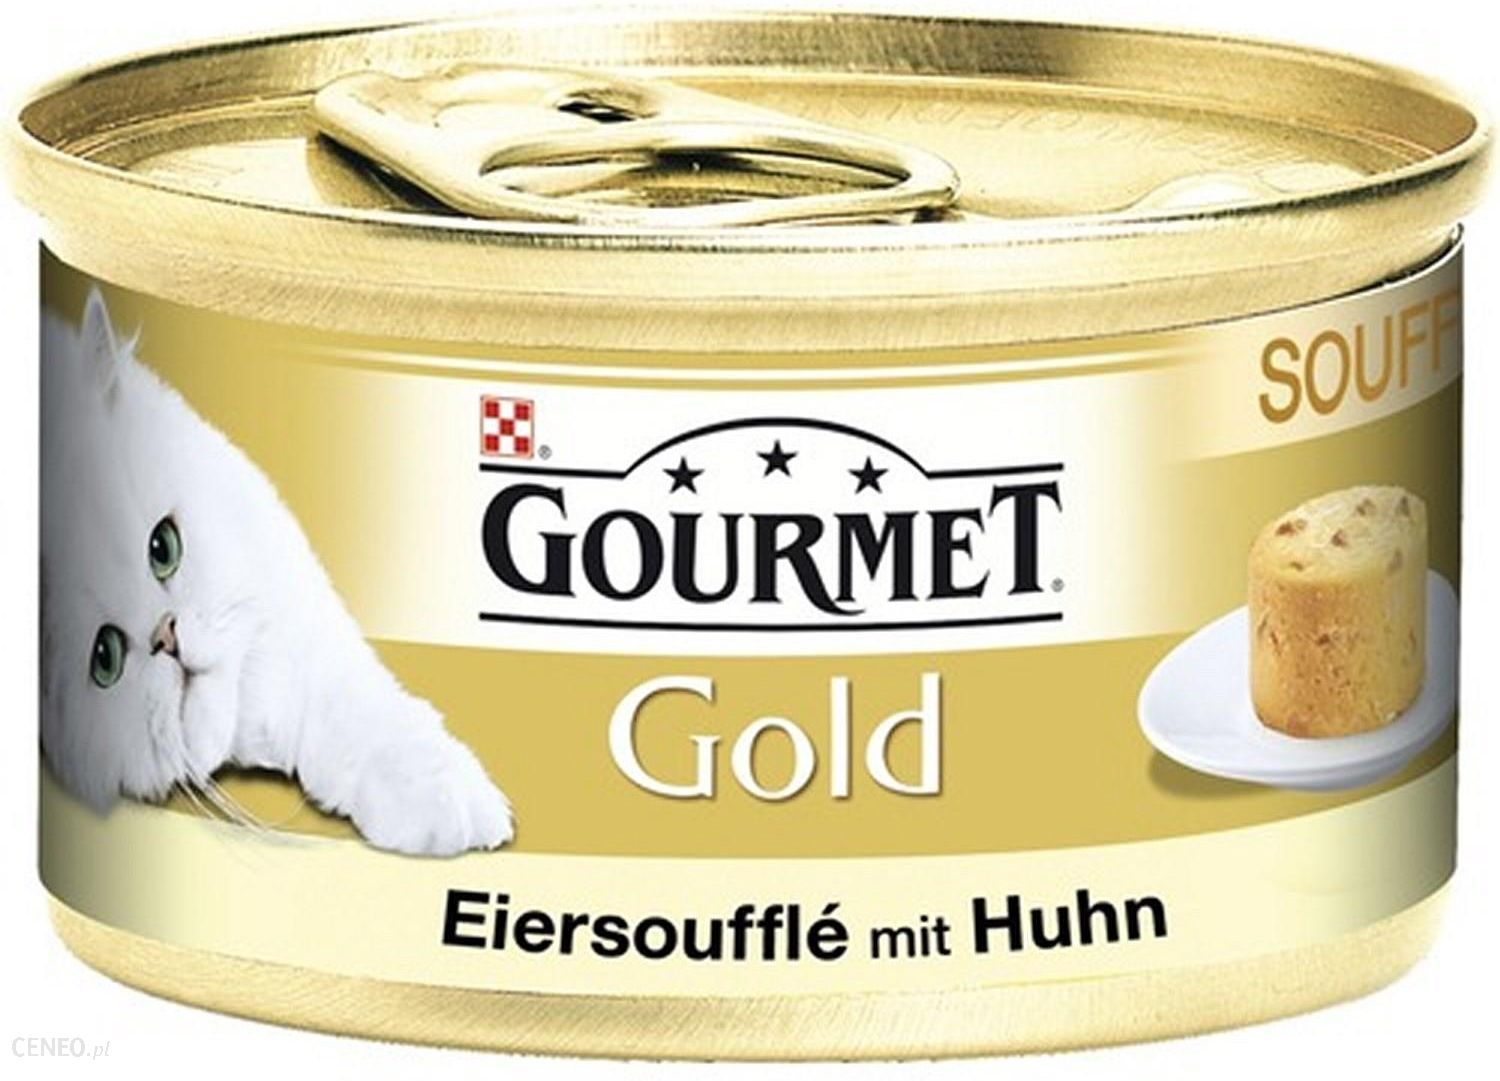 Корма gold. Gourmet Gold 85g. Корм для кошек Gourmet Gold брак. Nestle корма для кошек. Гурме для животных в отеле.